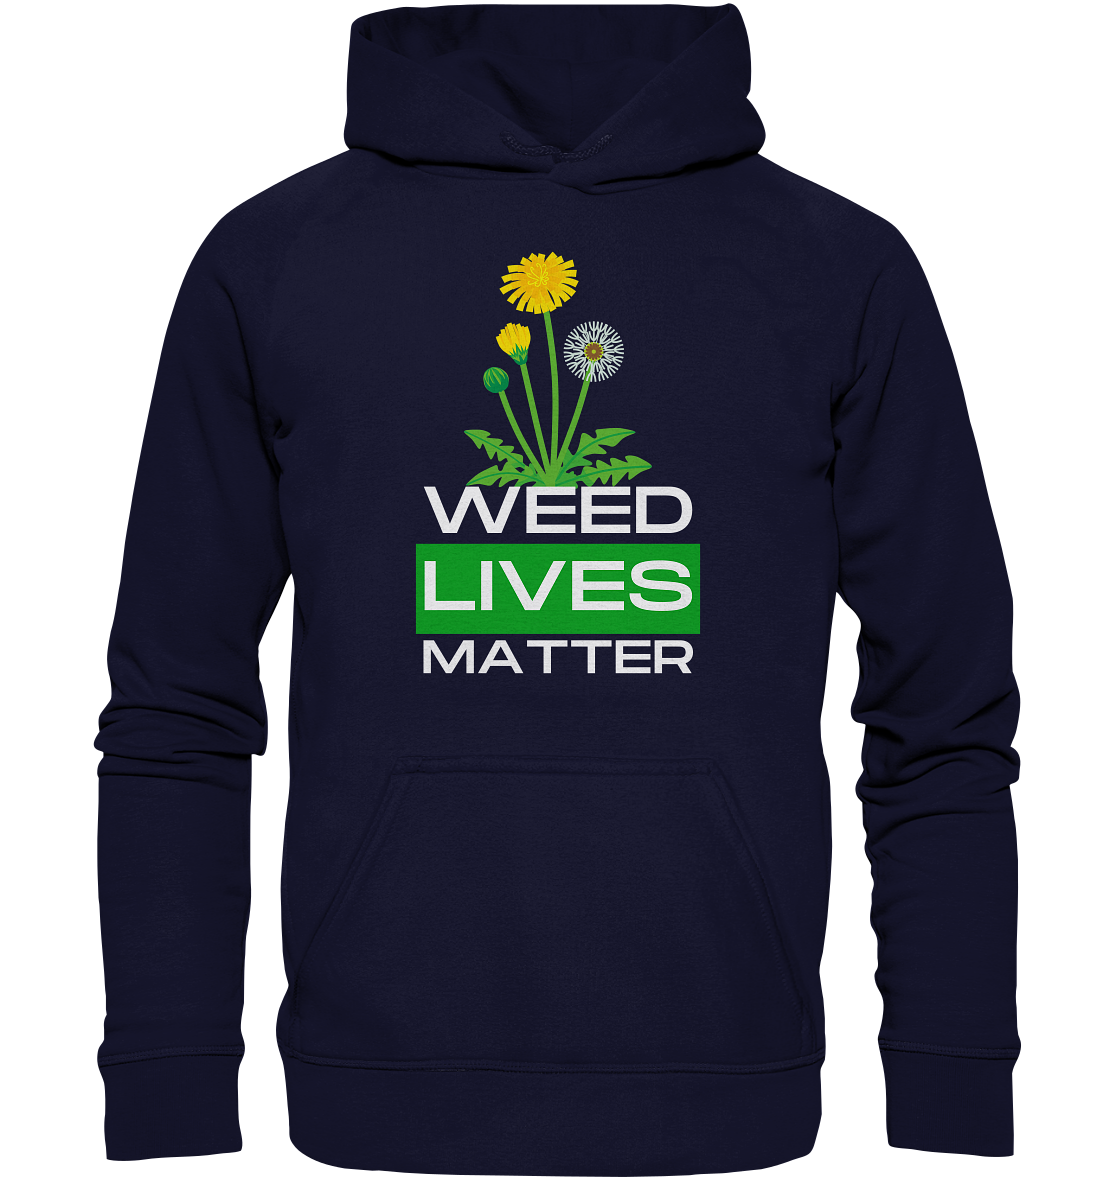 Weed lives matter - Unisex Hoodie